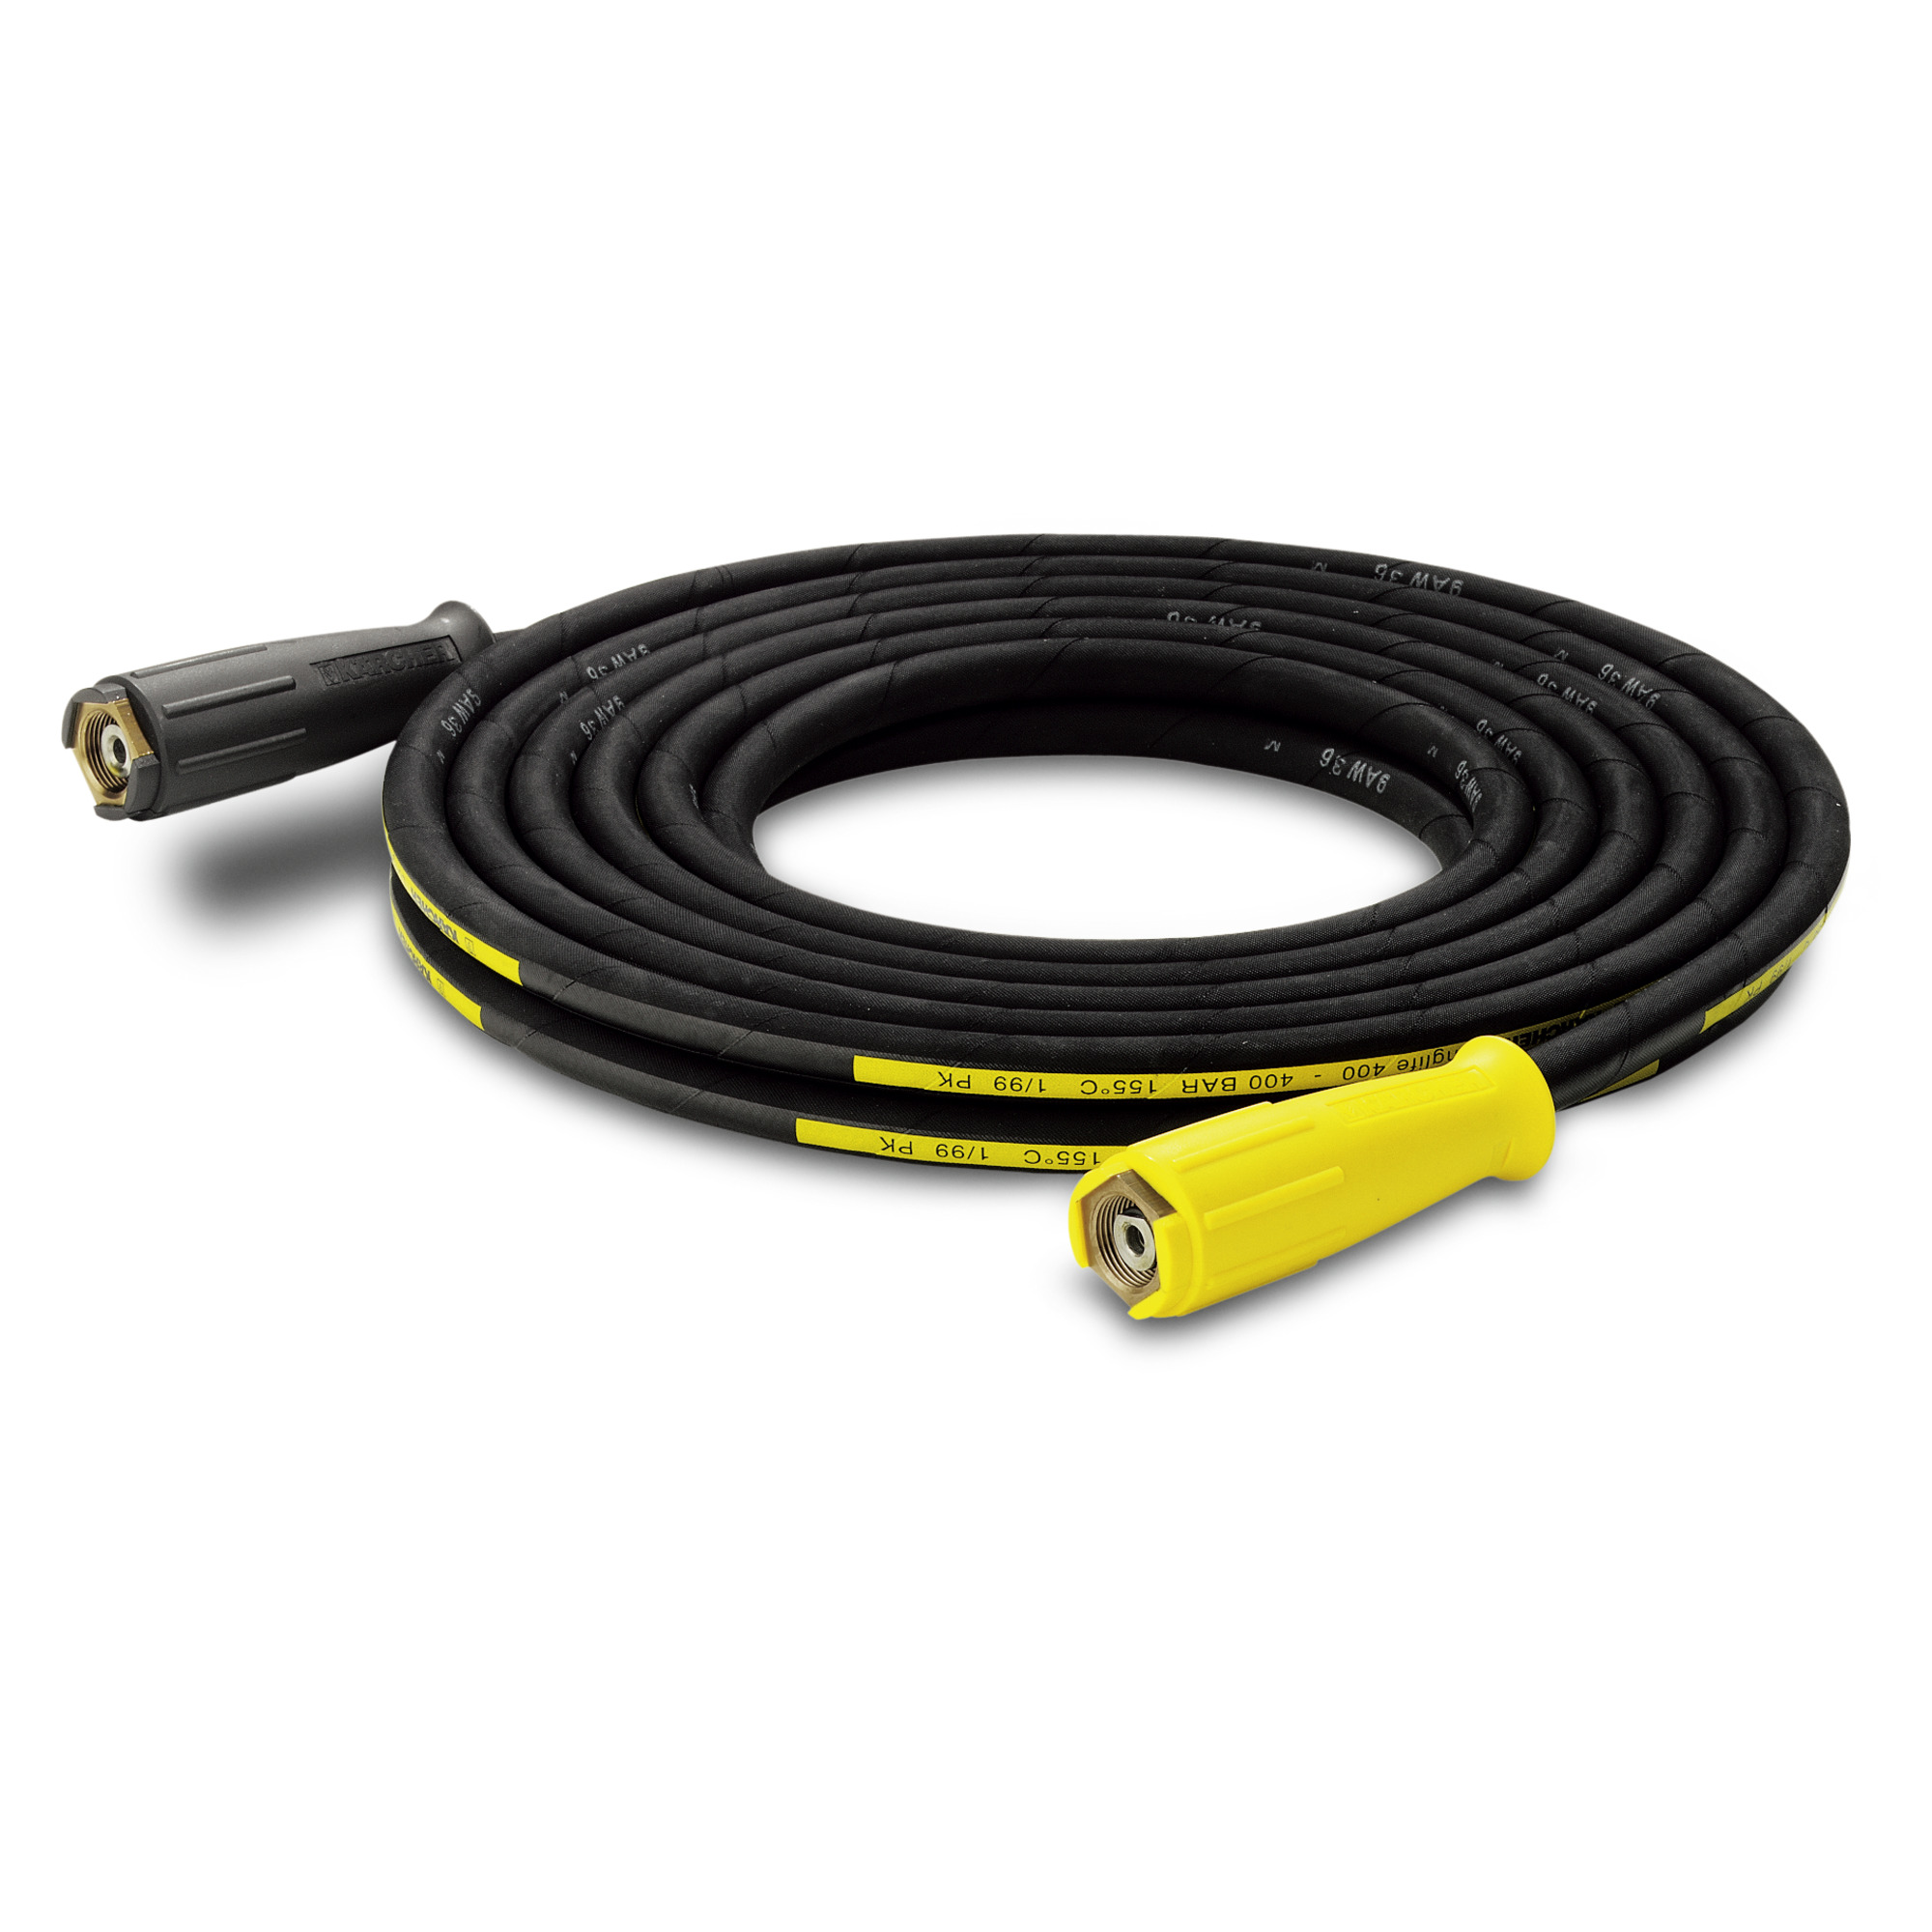 Kaercher High-pressure hose Longlife, 15 m, 400 bar, 2 x M22 x 1.5